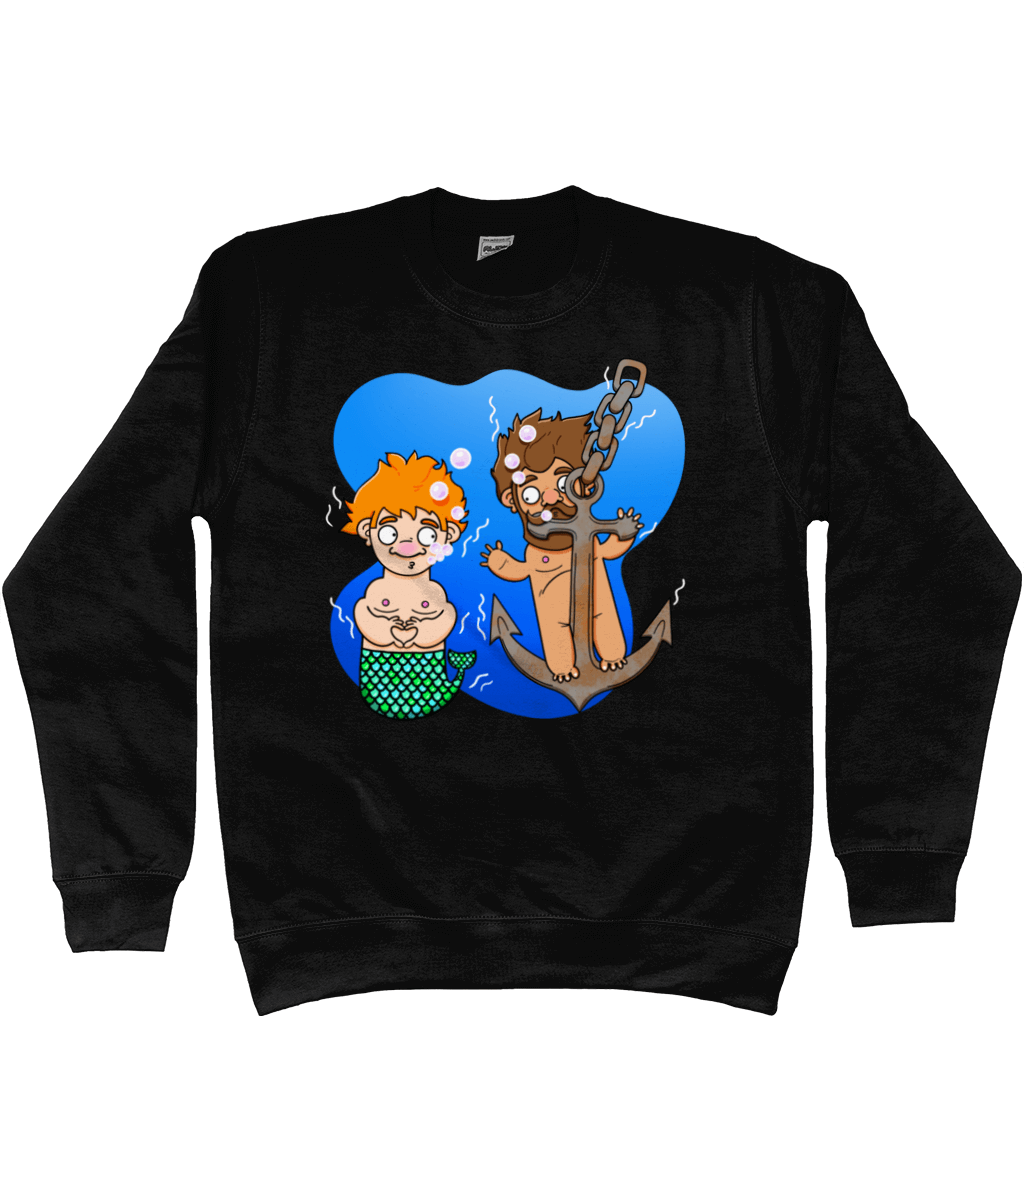 Ginger gay merman and his boyfriend under the sea on a black sweatshirt